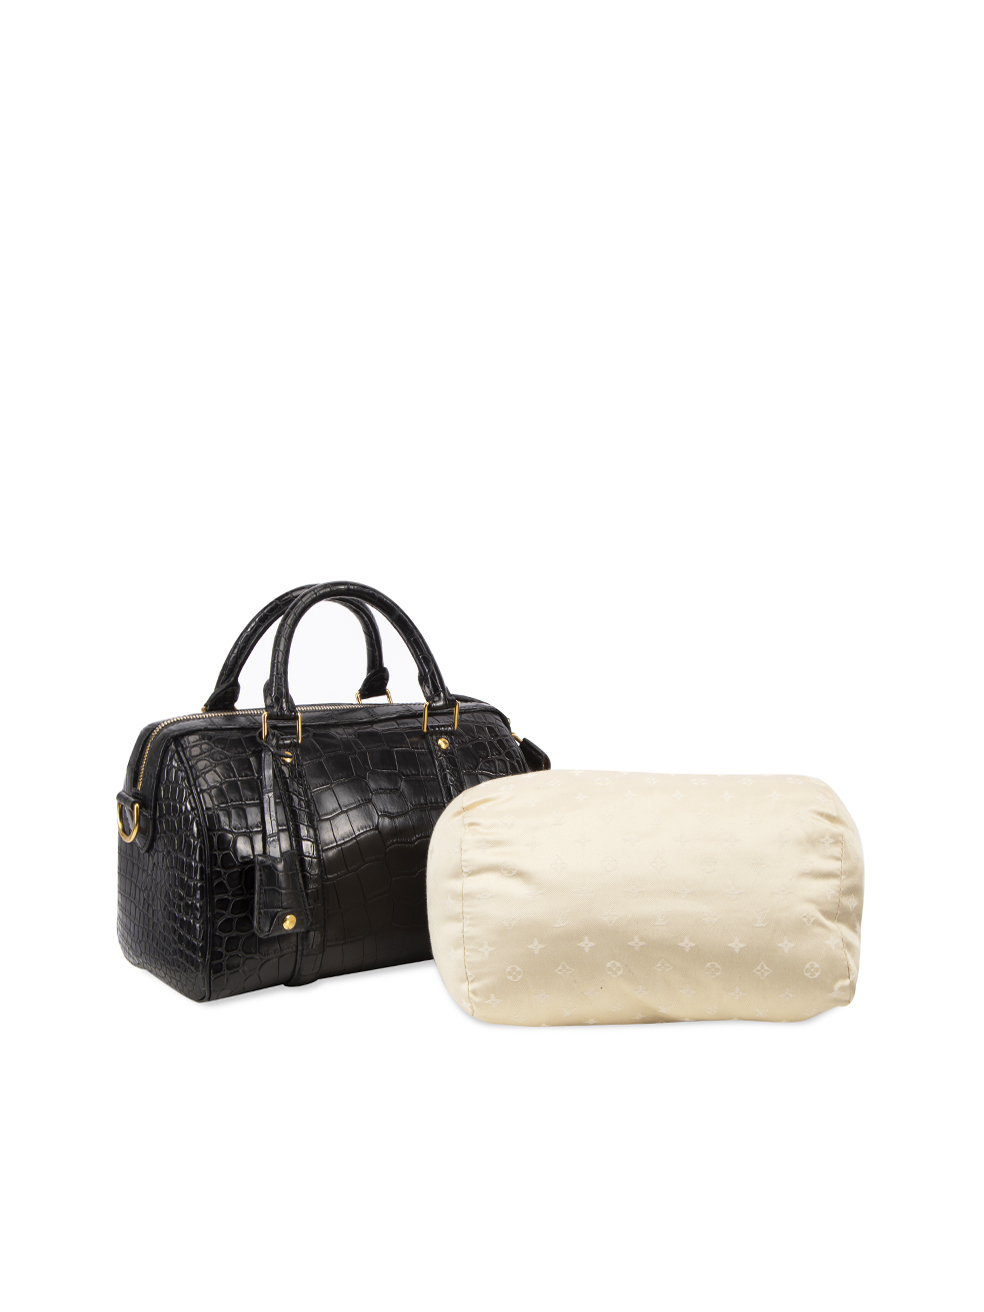 Used Louis Vuitton black leather Priscilla bag for Sale in Loganville